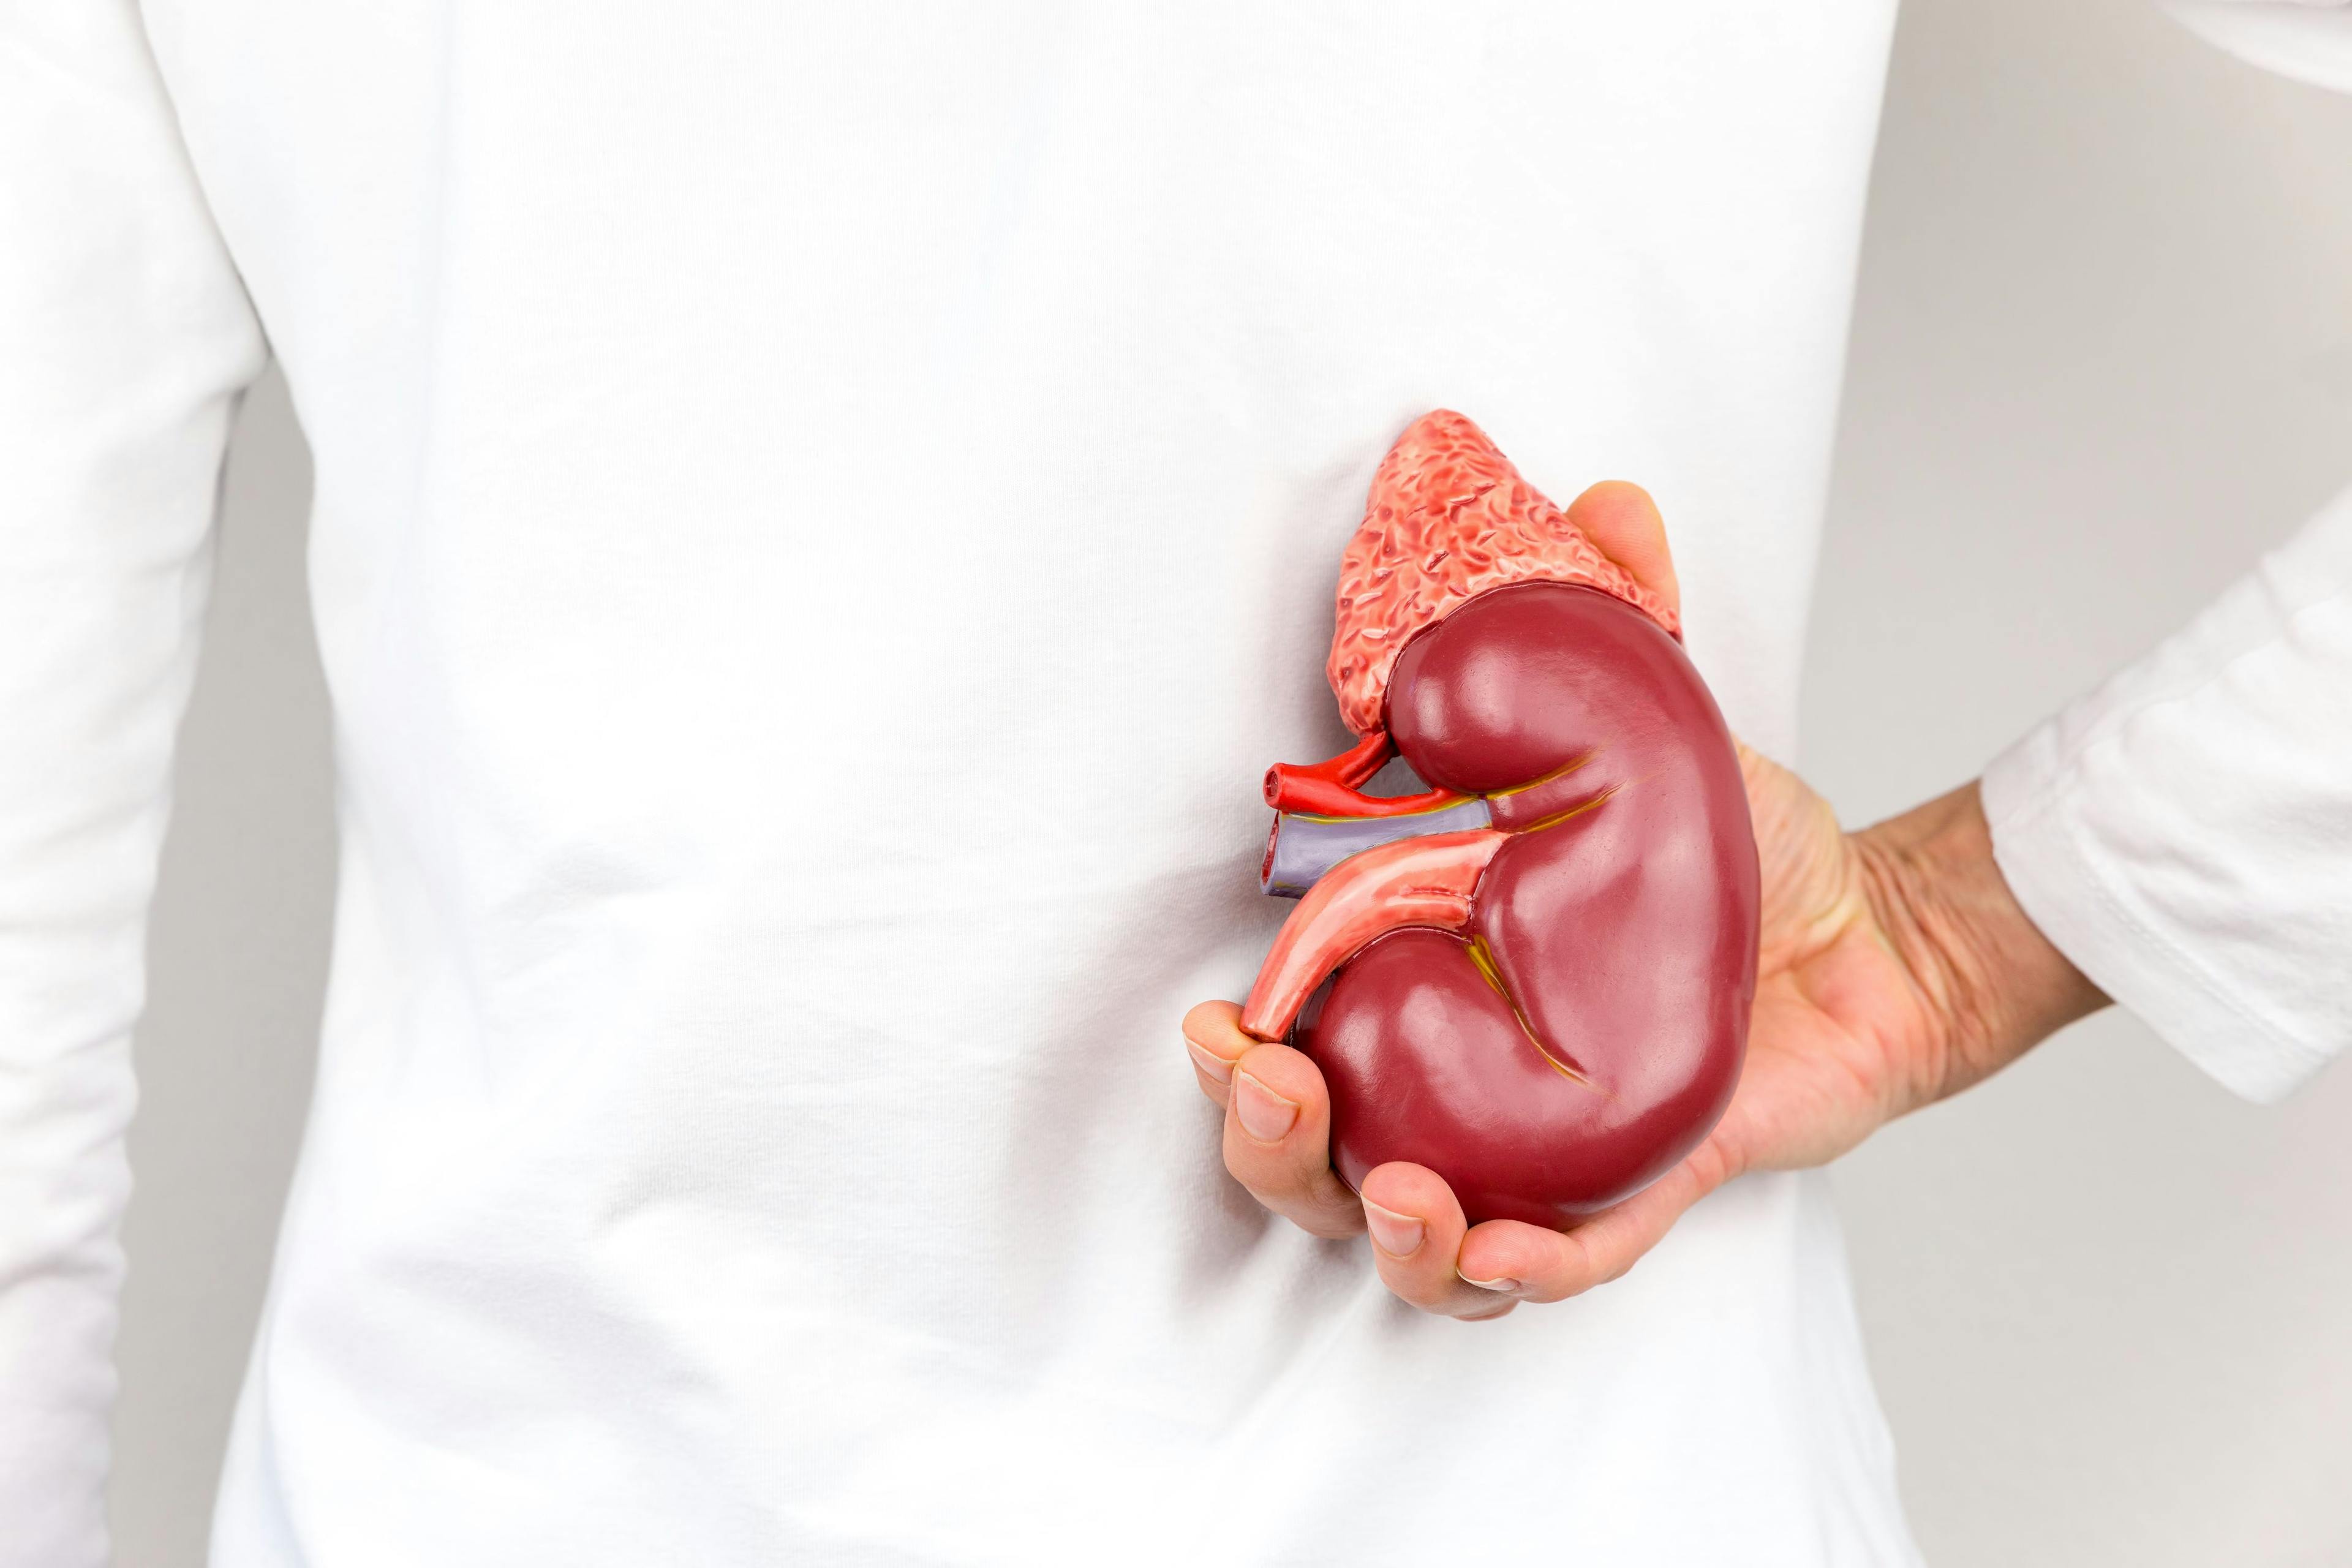 Hand holding model of human kidney organ at body | Image Credit: © benschonewille - stock.adobe.com